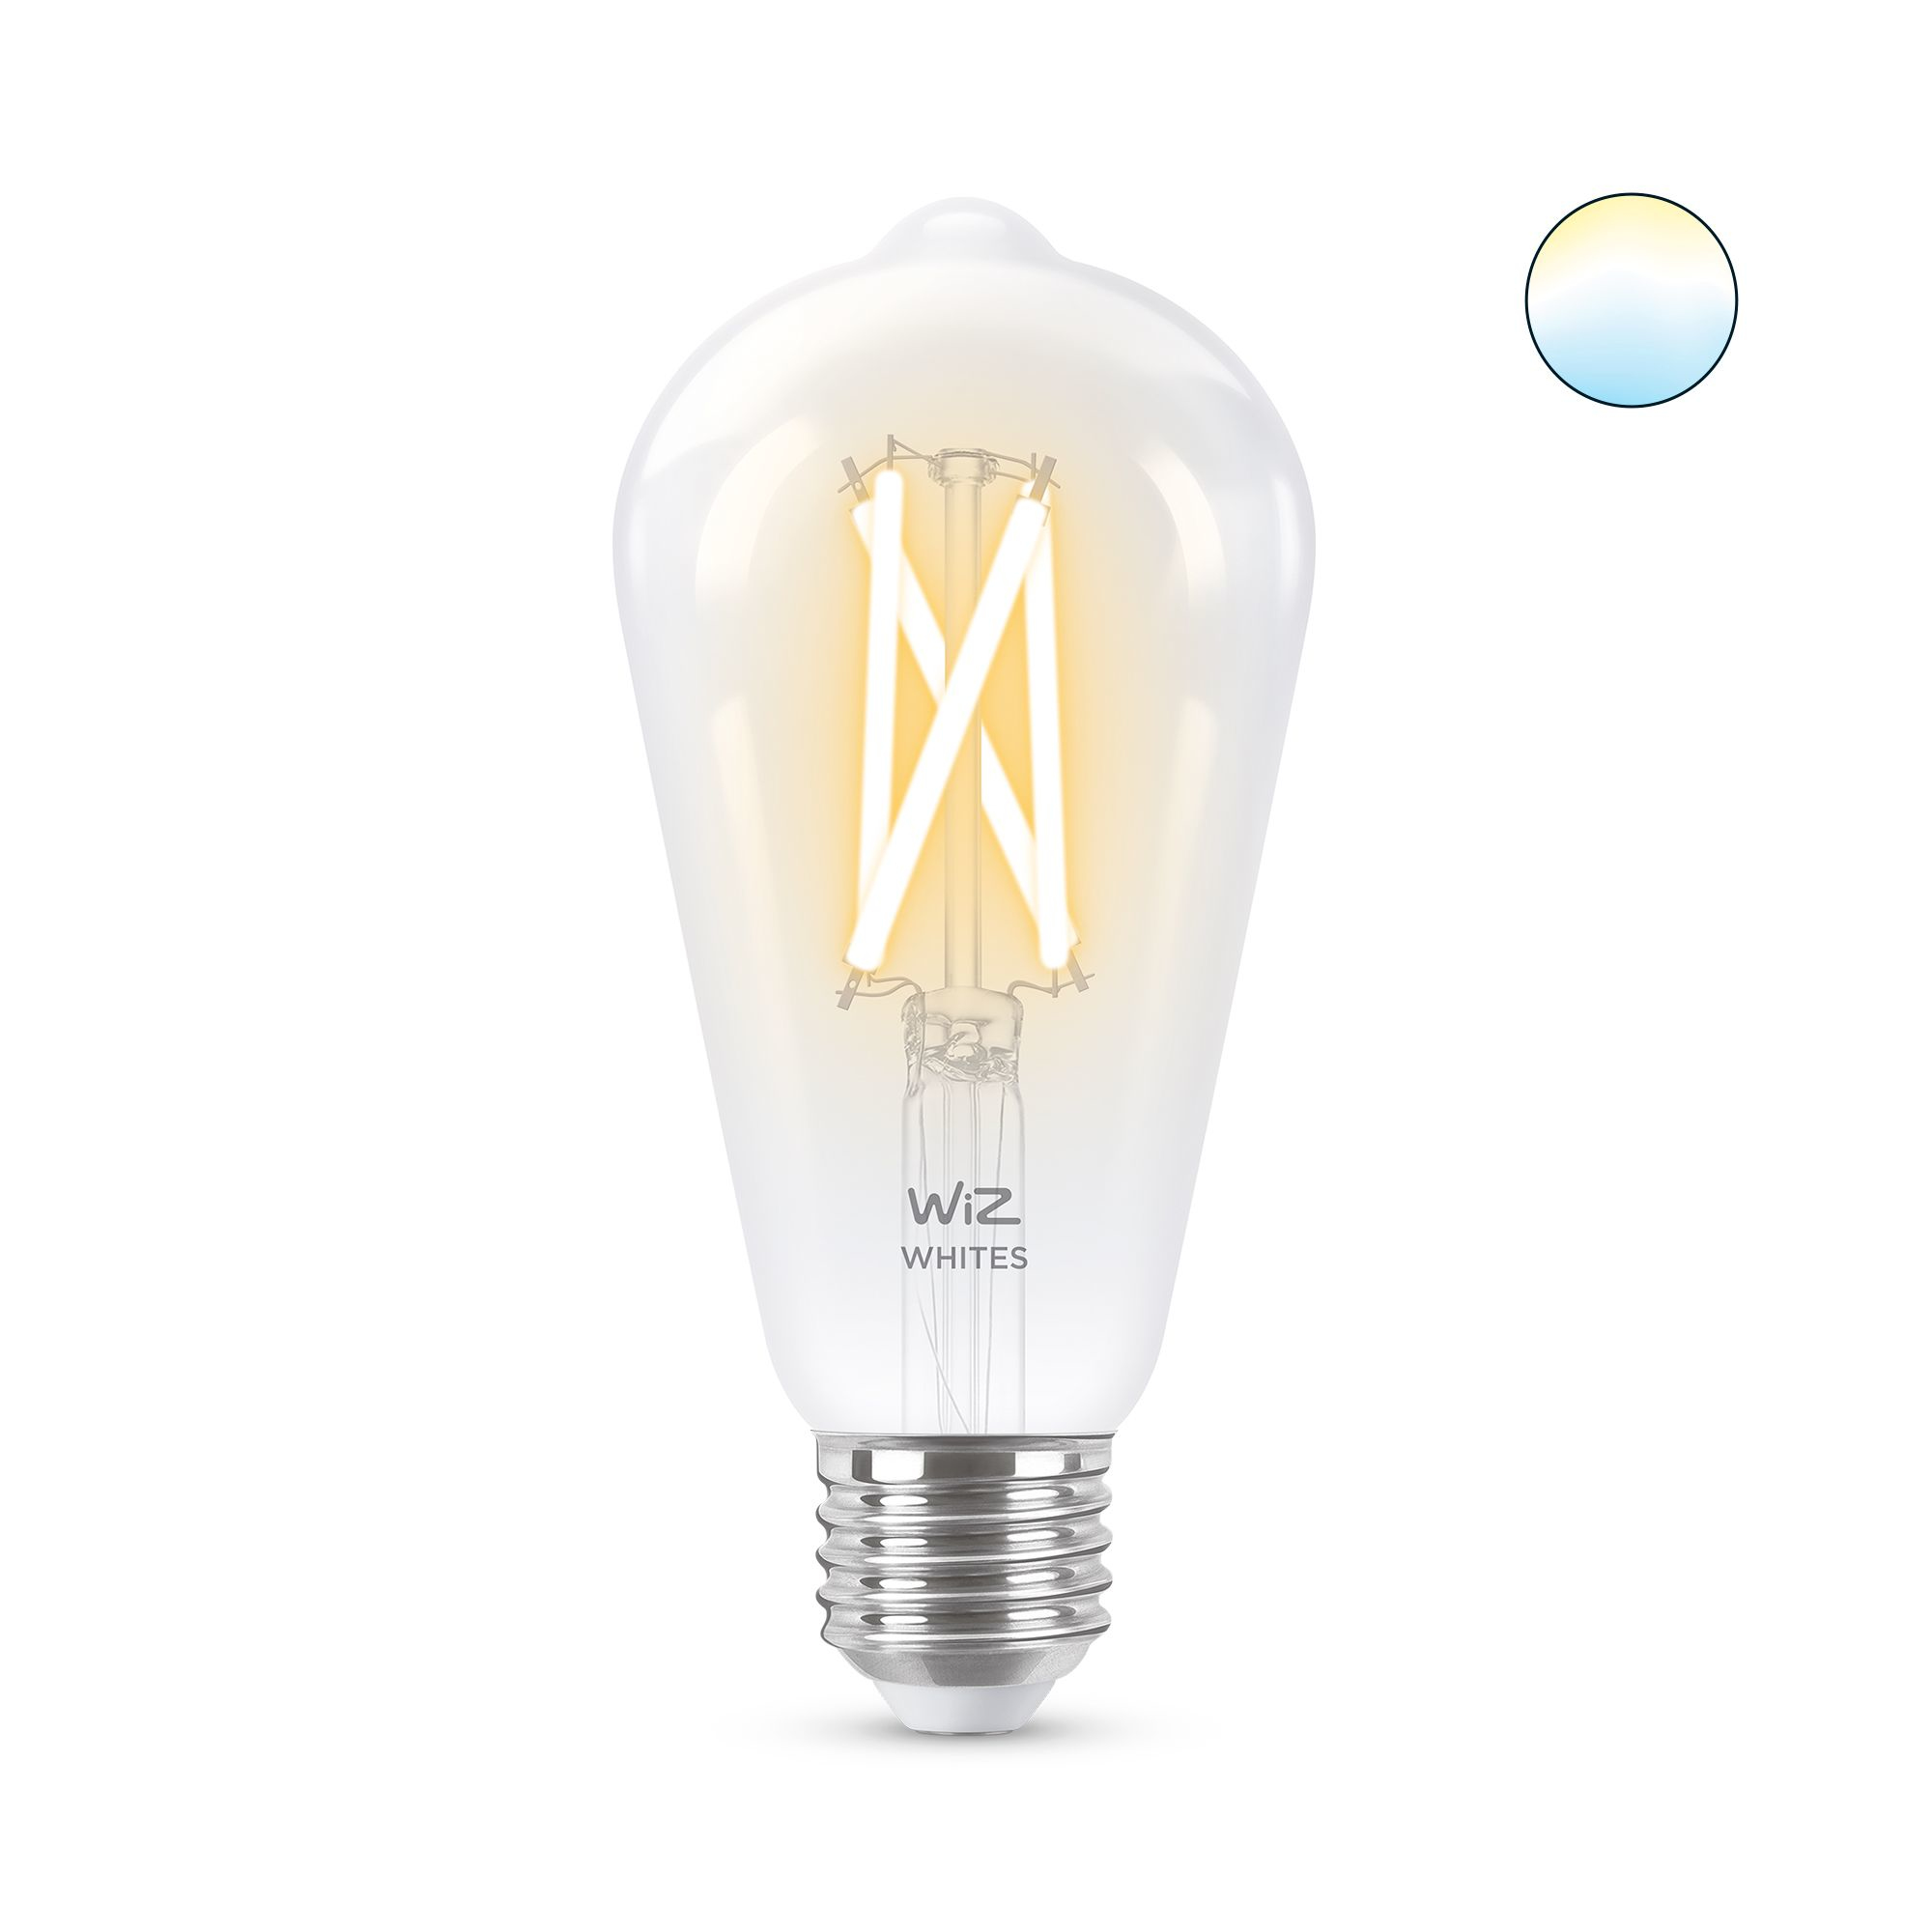 WIZCONNECTED WiZ 8718699787172 - Intelligente Glühbirne - Transparent - WLAN - E27 - Multi - 2700 K